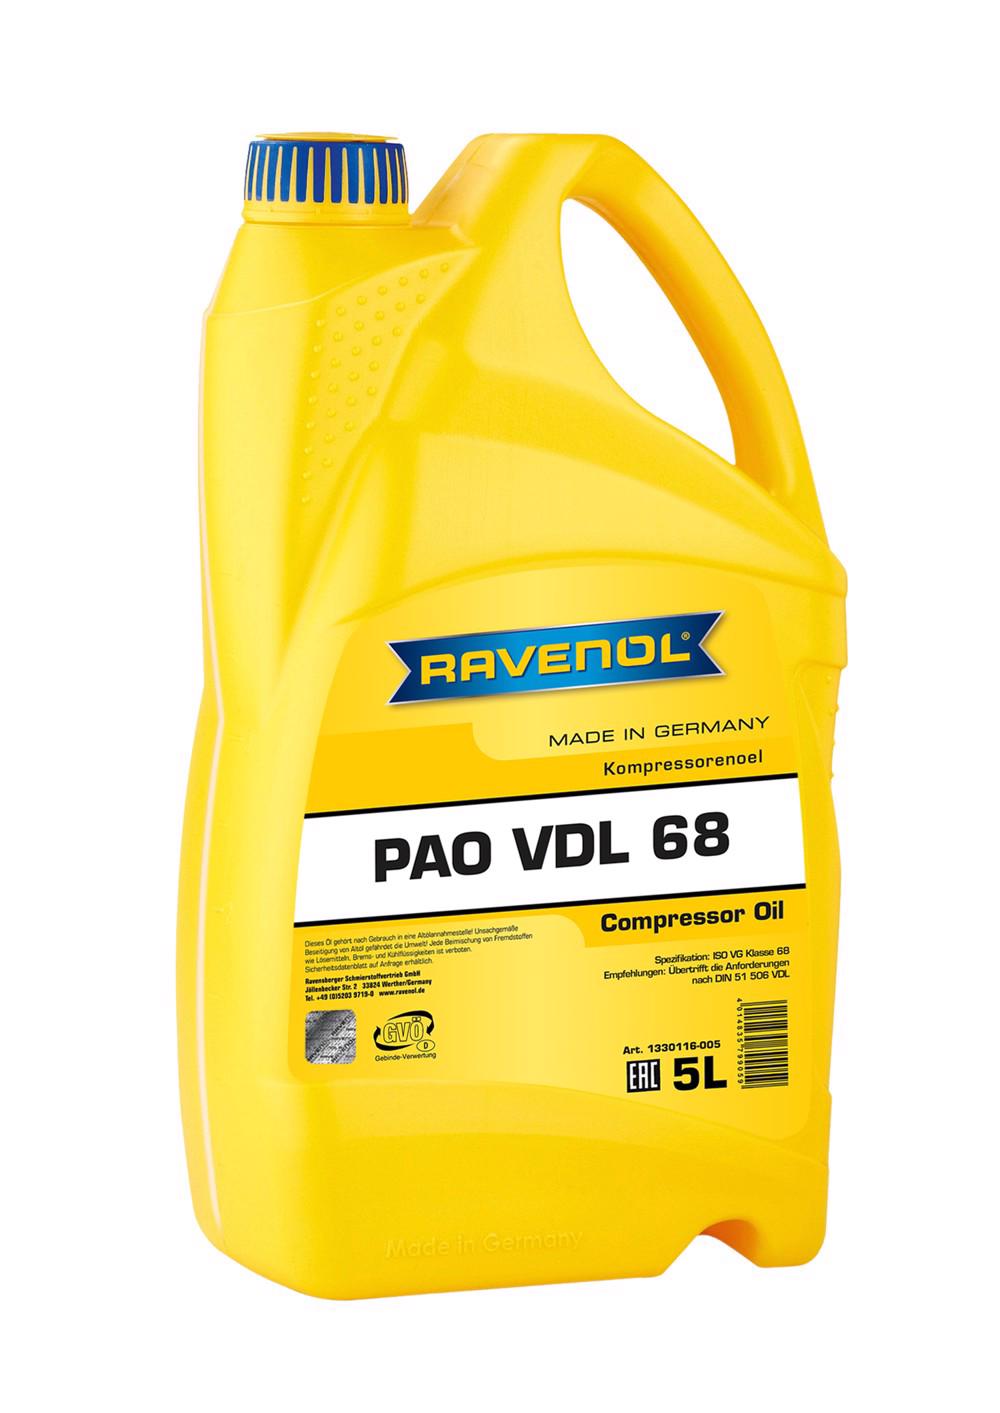 RAVENOL Kompressorenoel PAO VDL 68